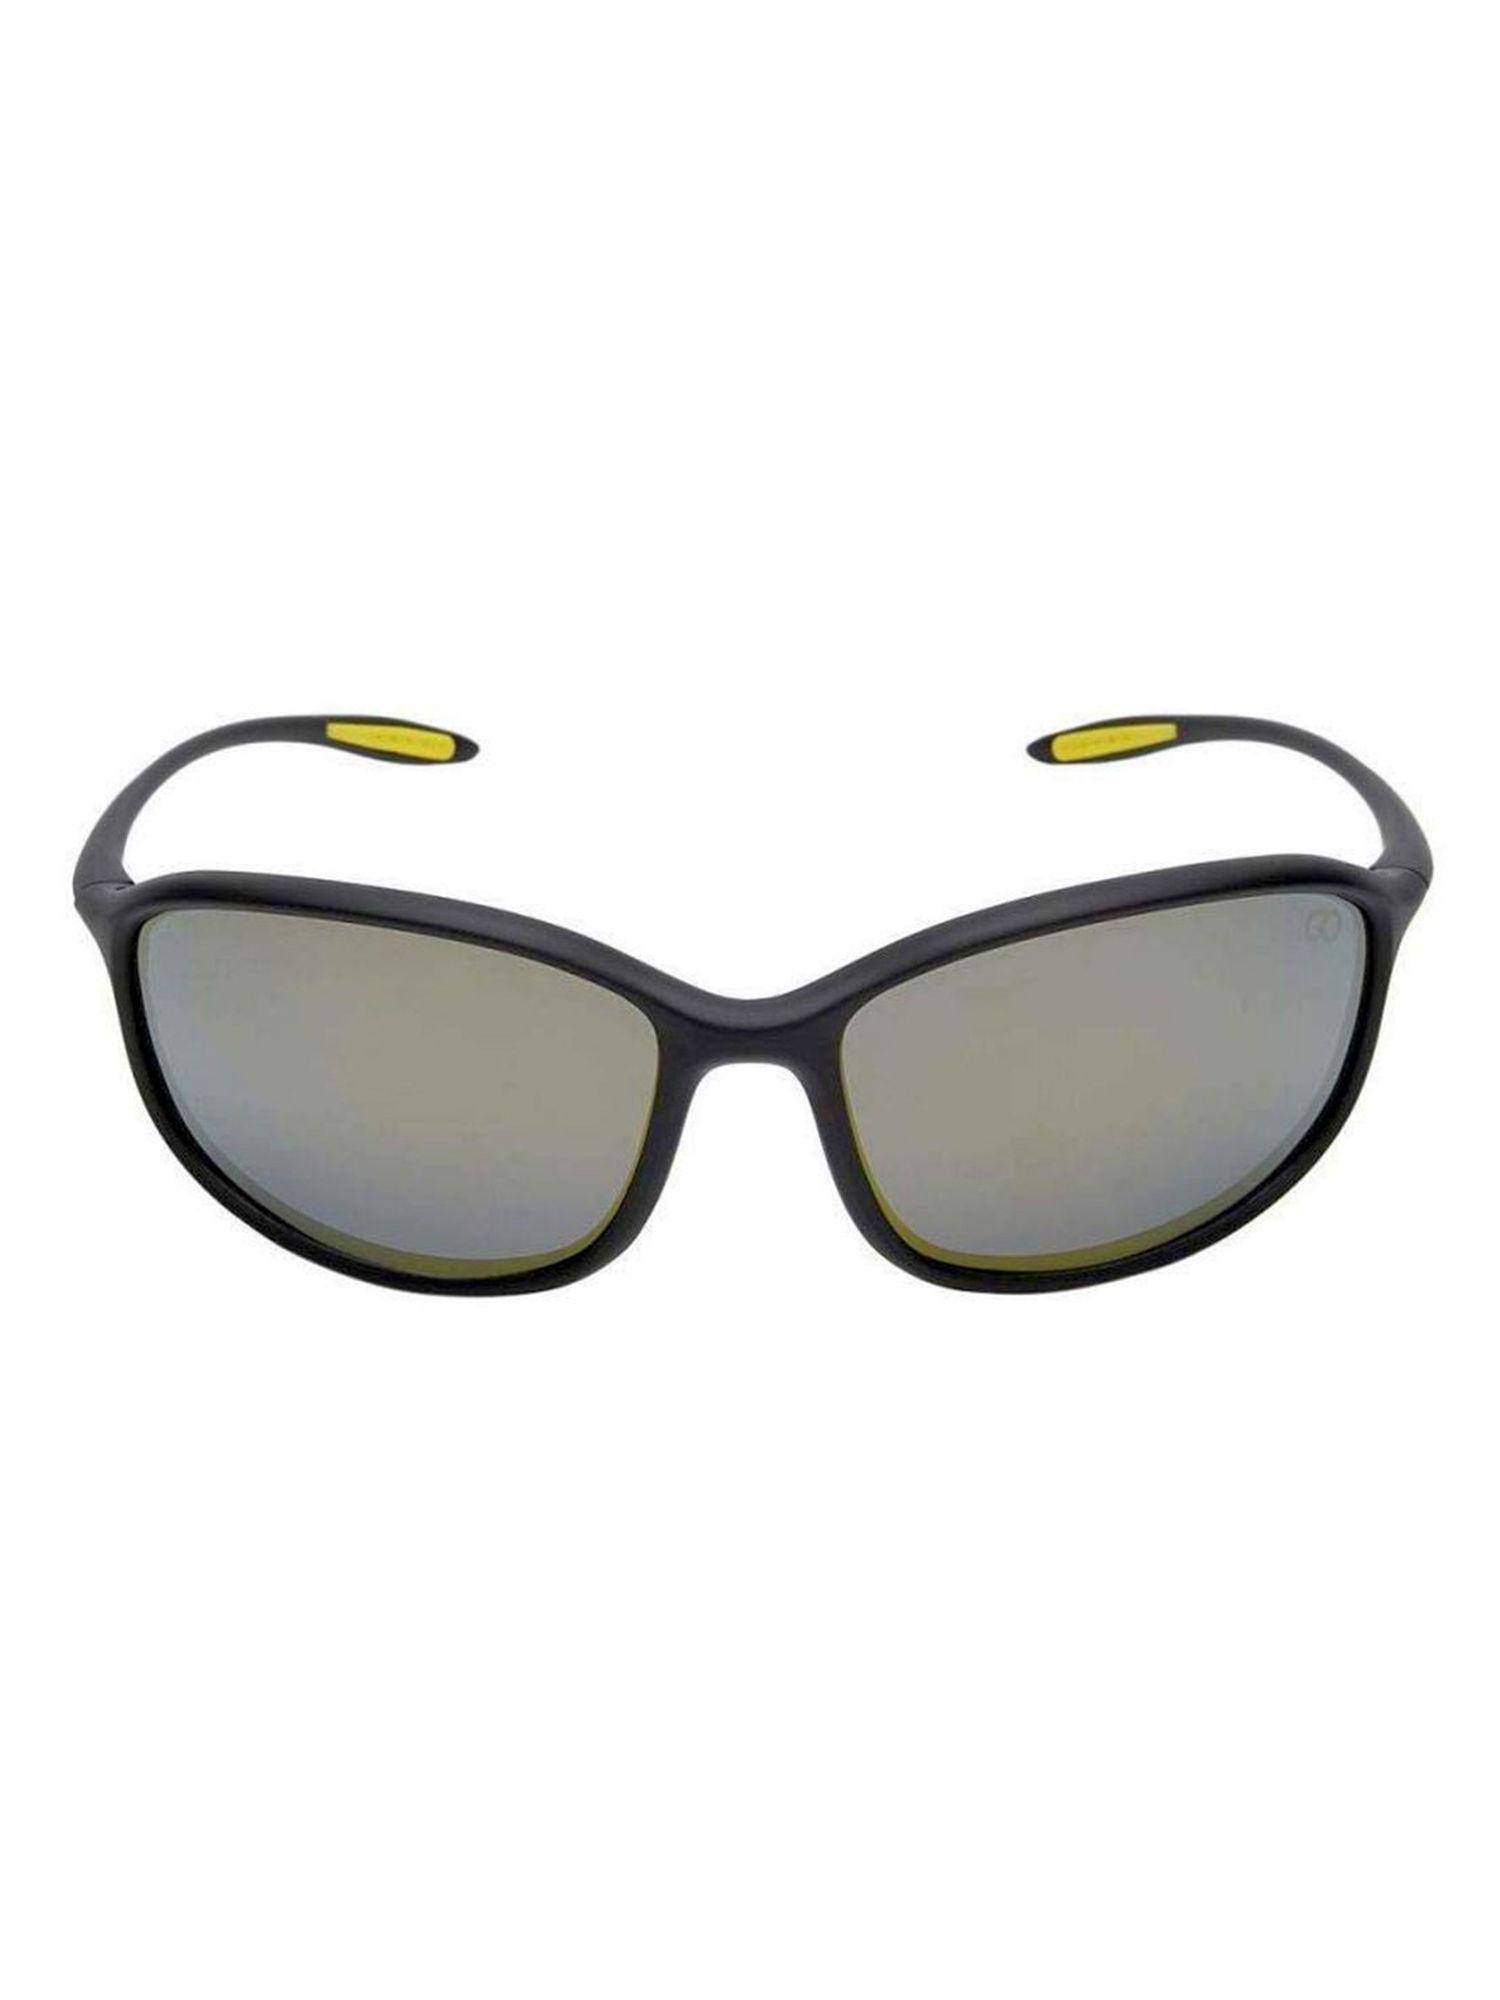 square women sunglasses - grey